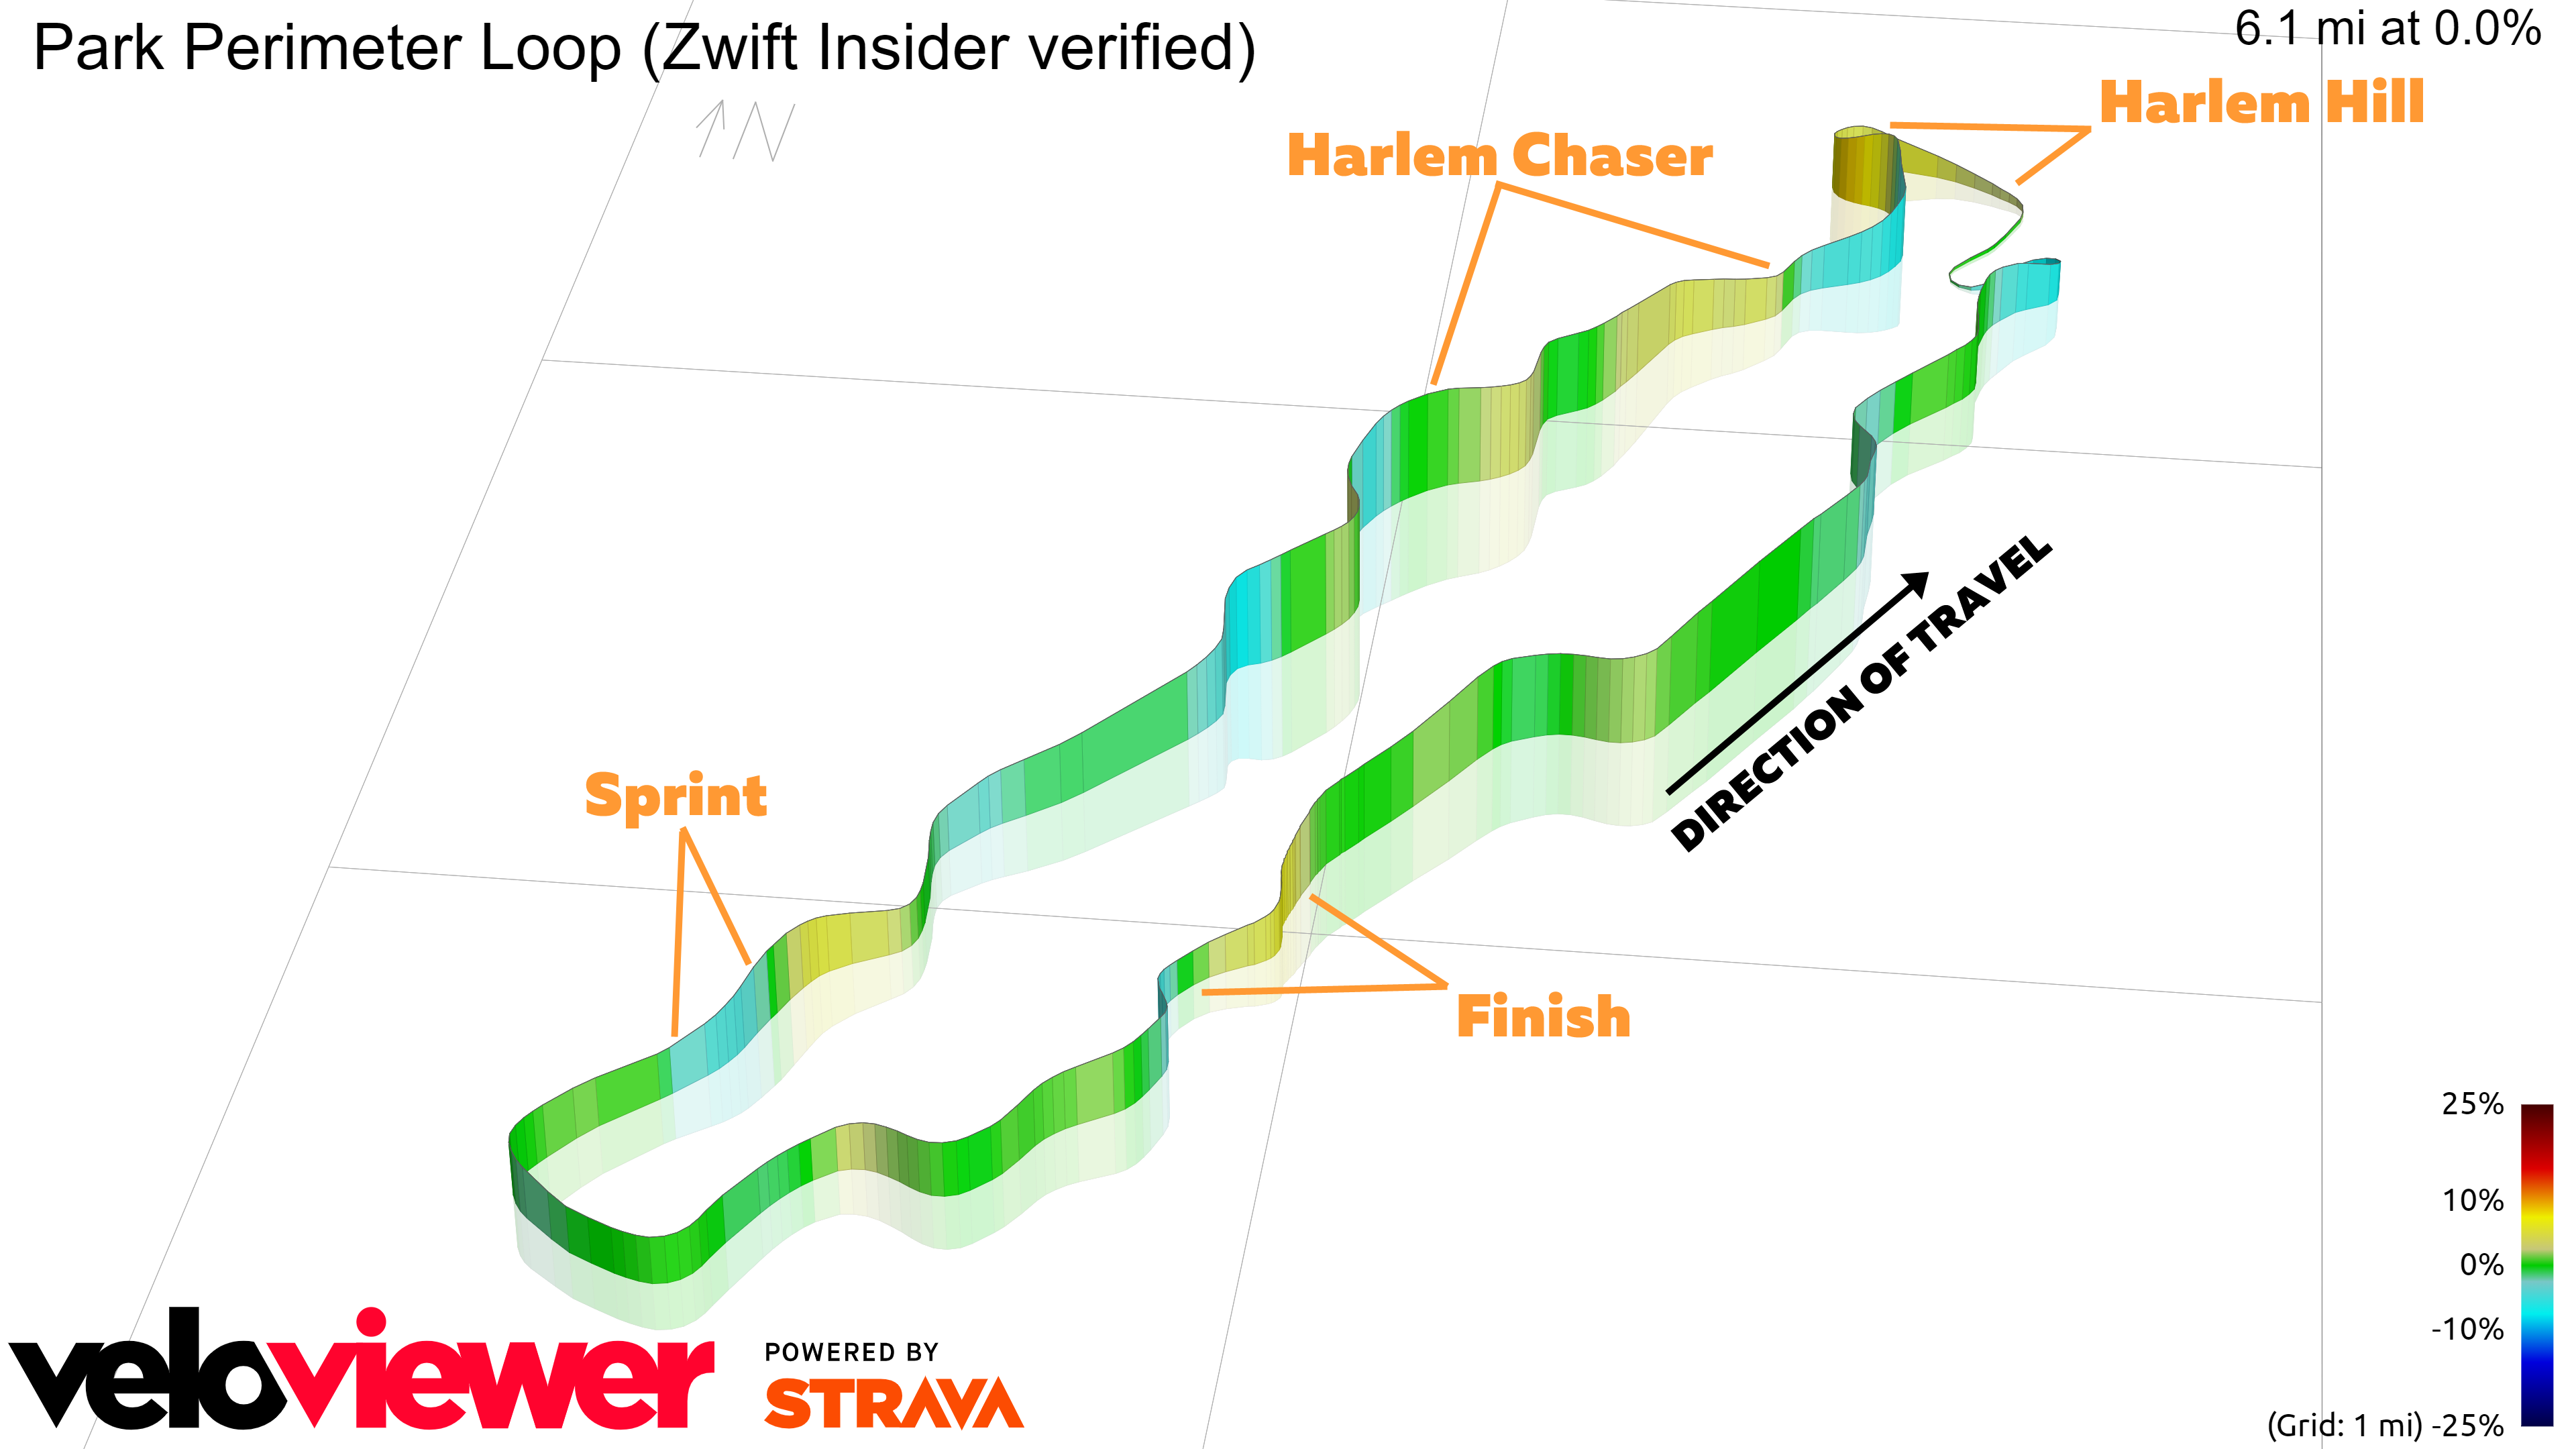 Zwift workouts: GCN » Power Climbs » Steeper & Steeper